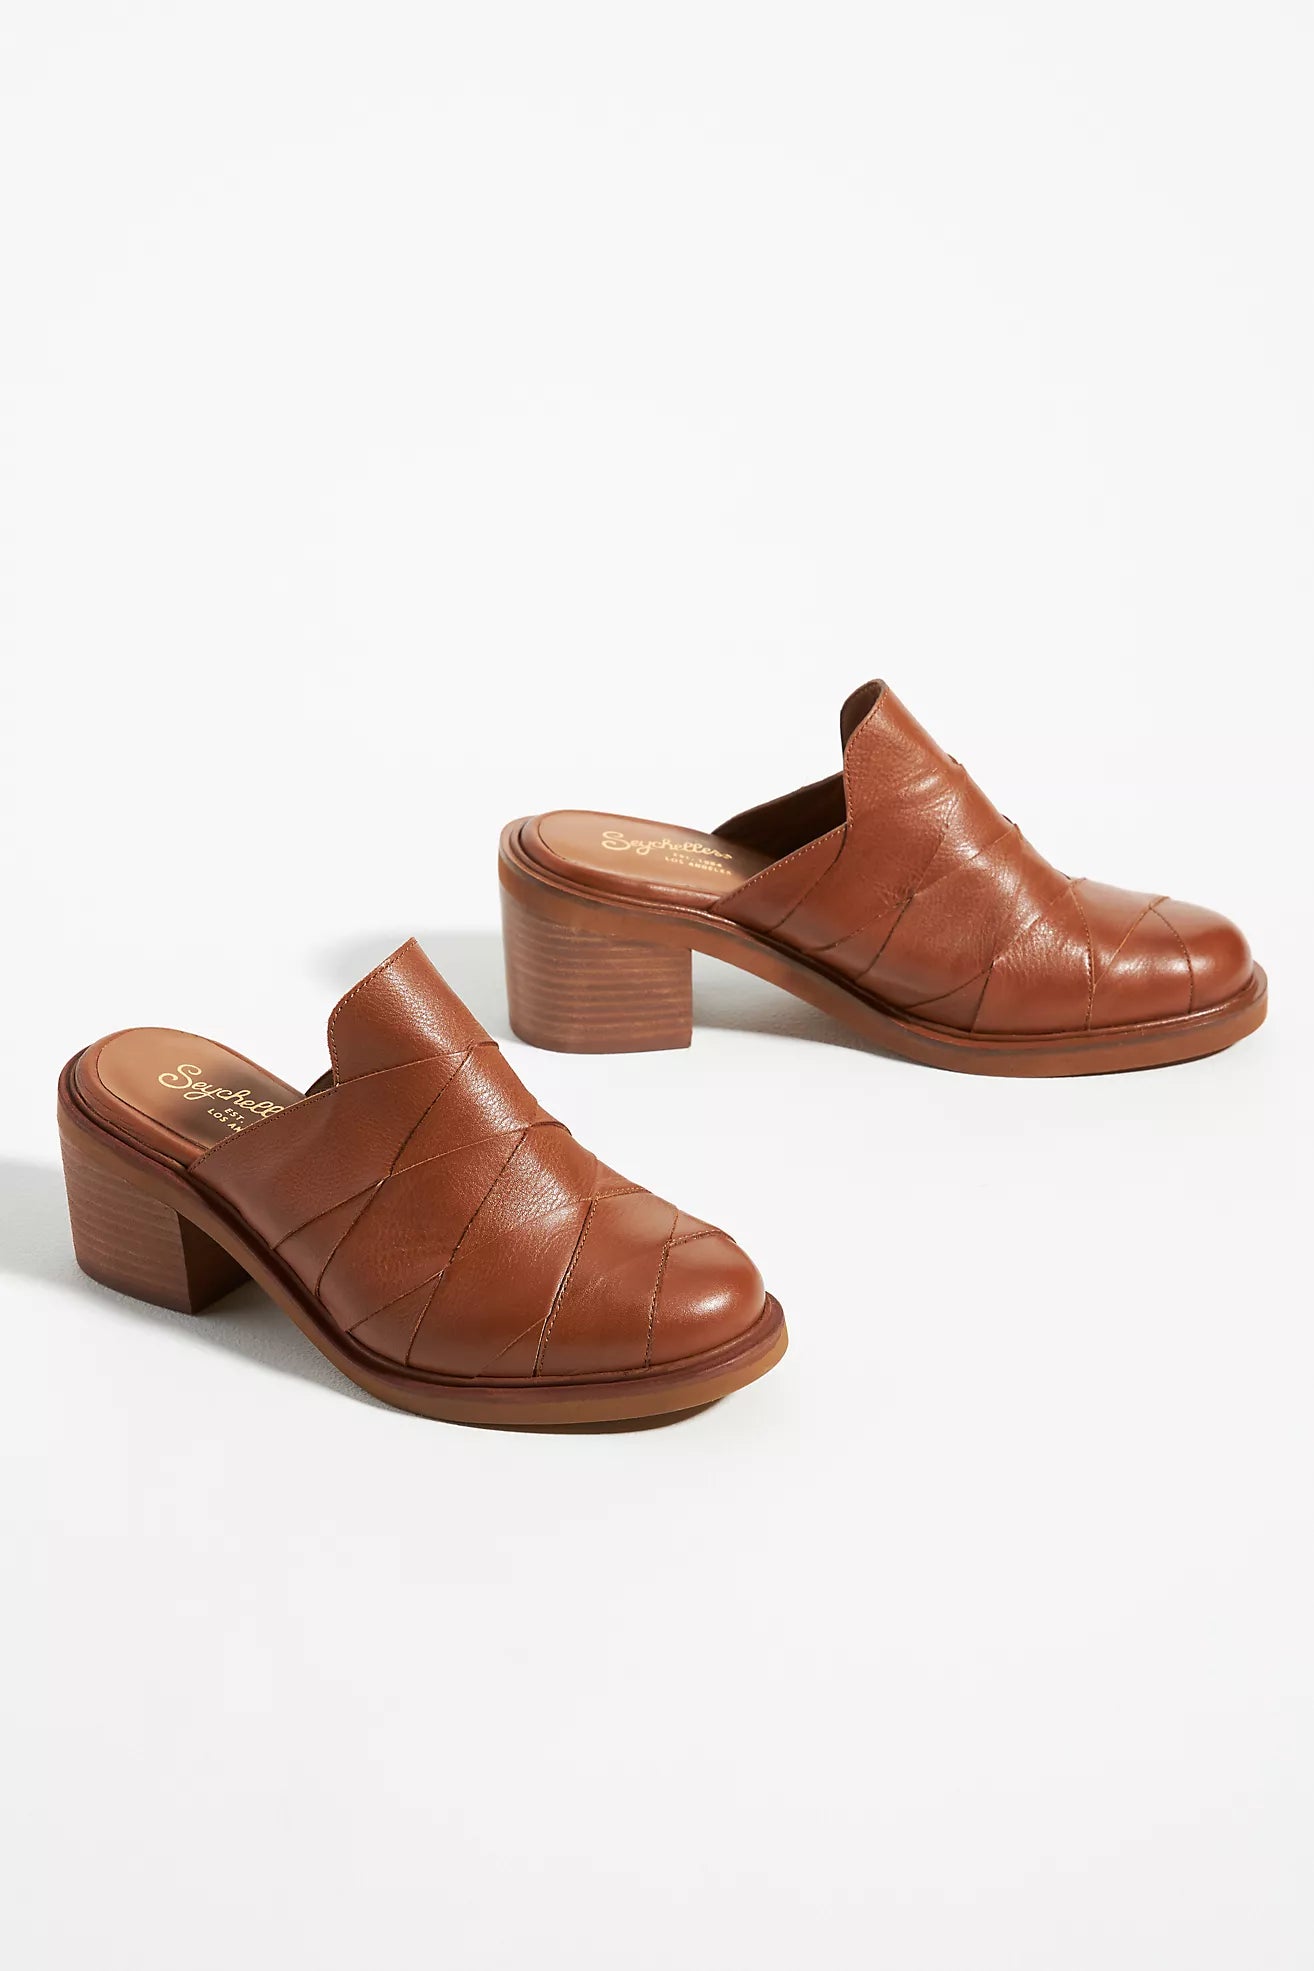 Seychelles Masterpiece Heels - gilt+gossamer